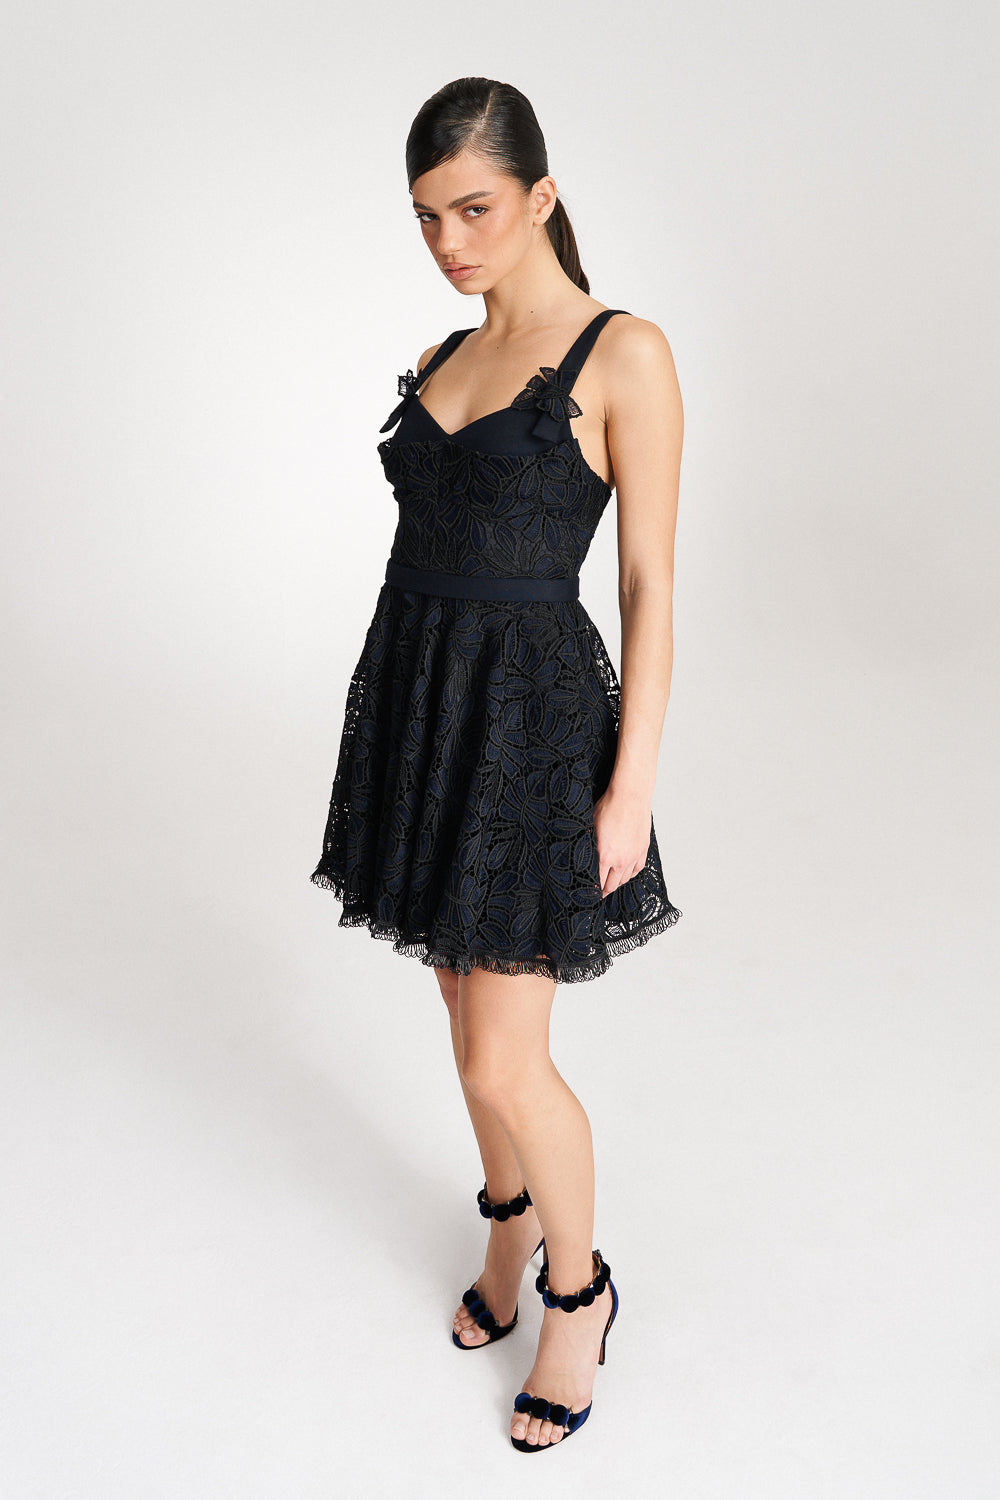 'Elise' Navy and Black Lace Mini Dress